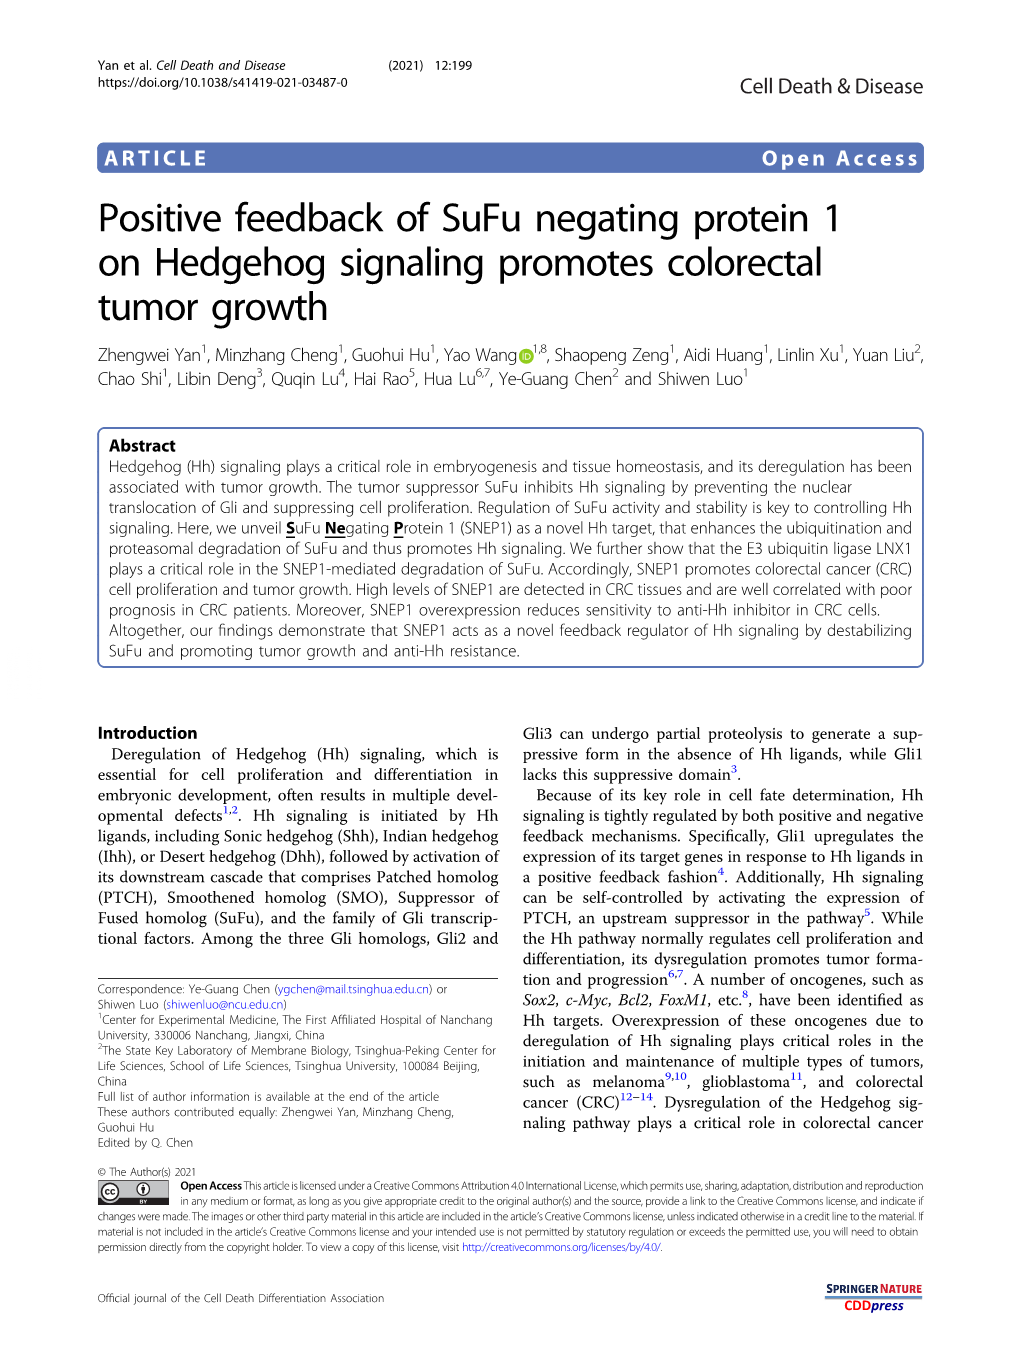 Positive Feedback of Sufu Negating Protein 1 on Hedgehog Signaling